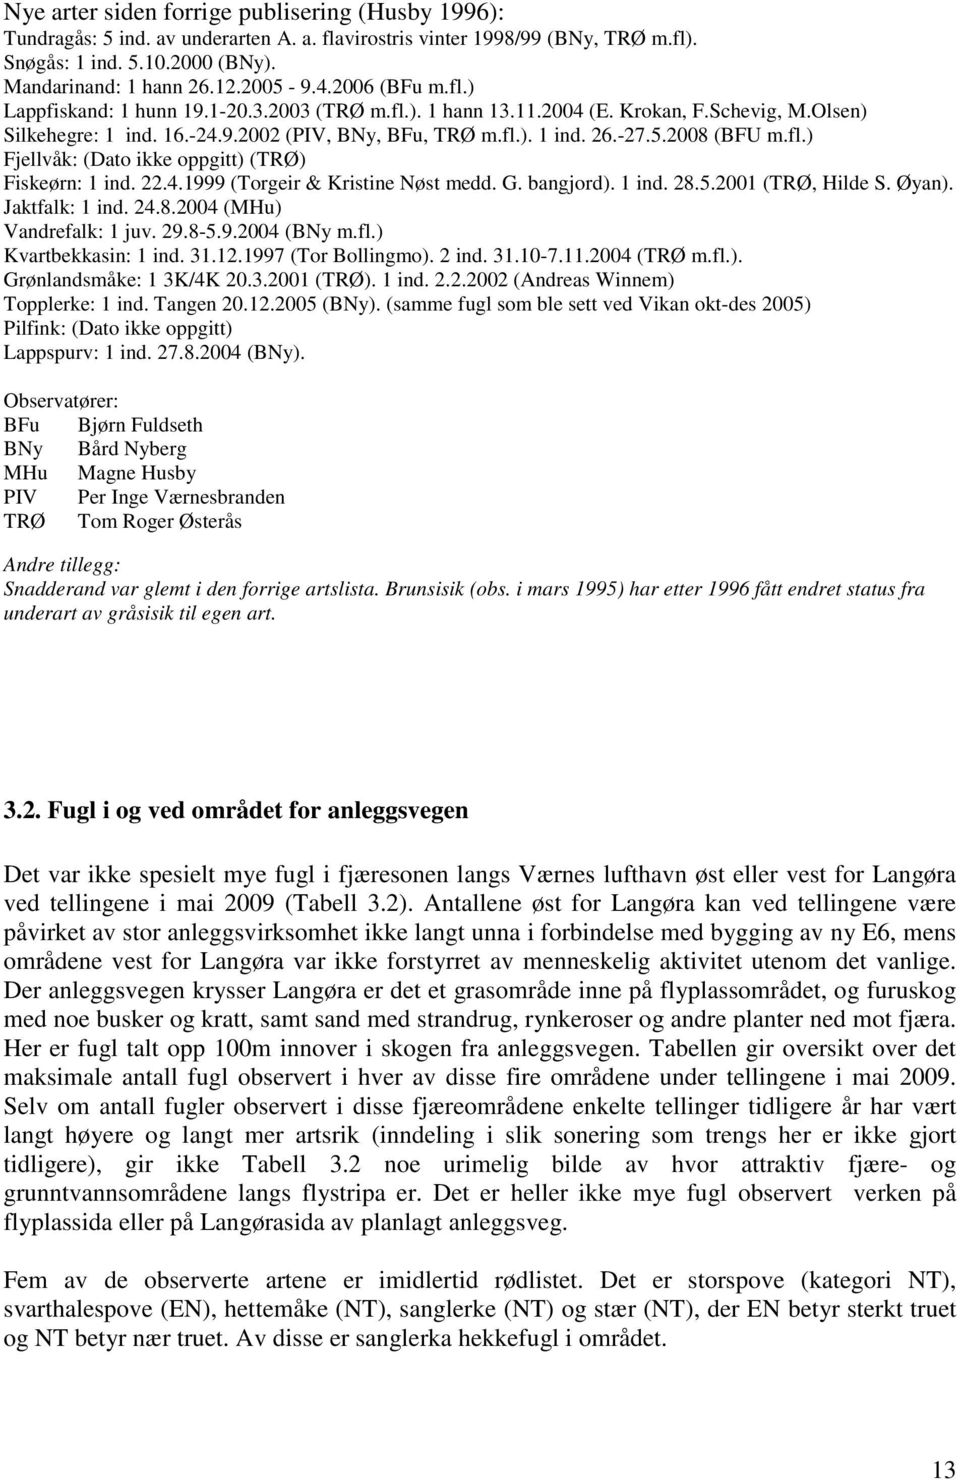 fl.). 1 ind. 26.-27.5.2008 (BFU m.fl.) Fjellvåk: (Dato ikke oppgitt) (TRØ) Fiskeørn: 1 ind. 22.4.1999 (Torgeir & Kristine Nøst medd. G. bangjord). 1 ind. 28.5.2001 (TRØ, Hilde S. Øyan).